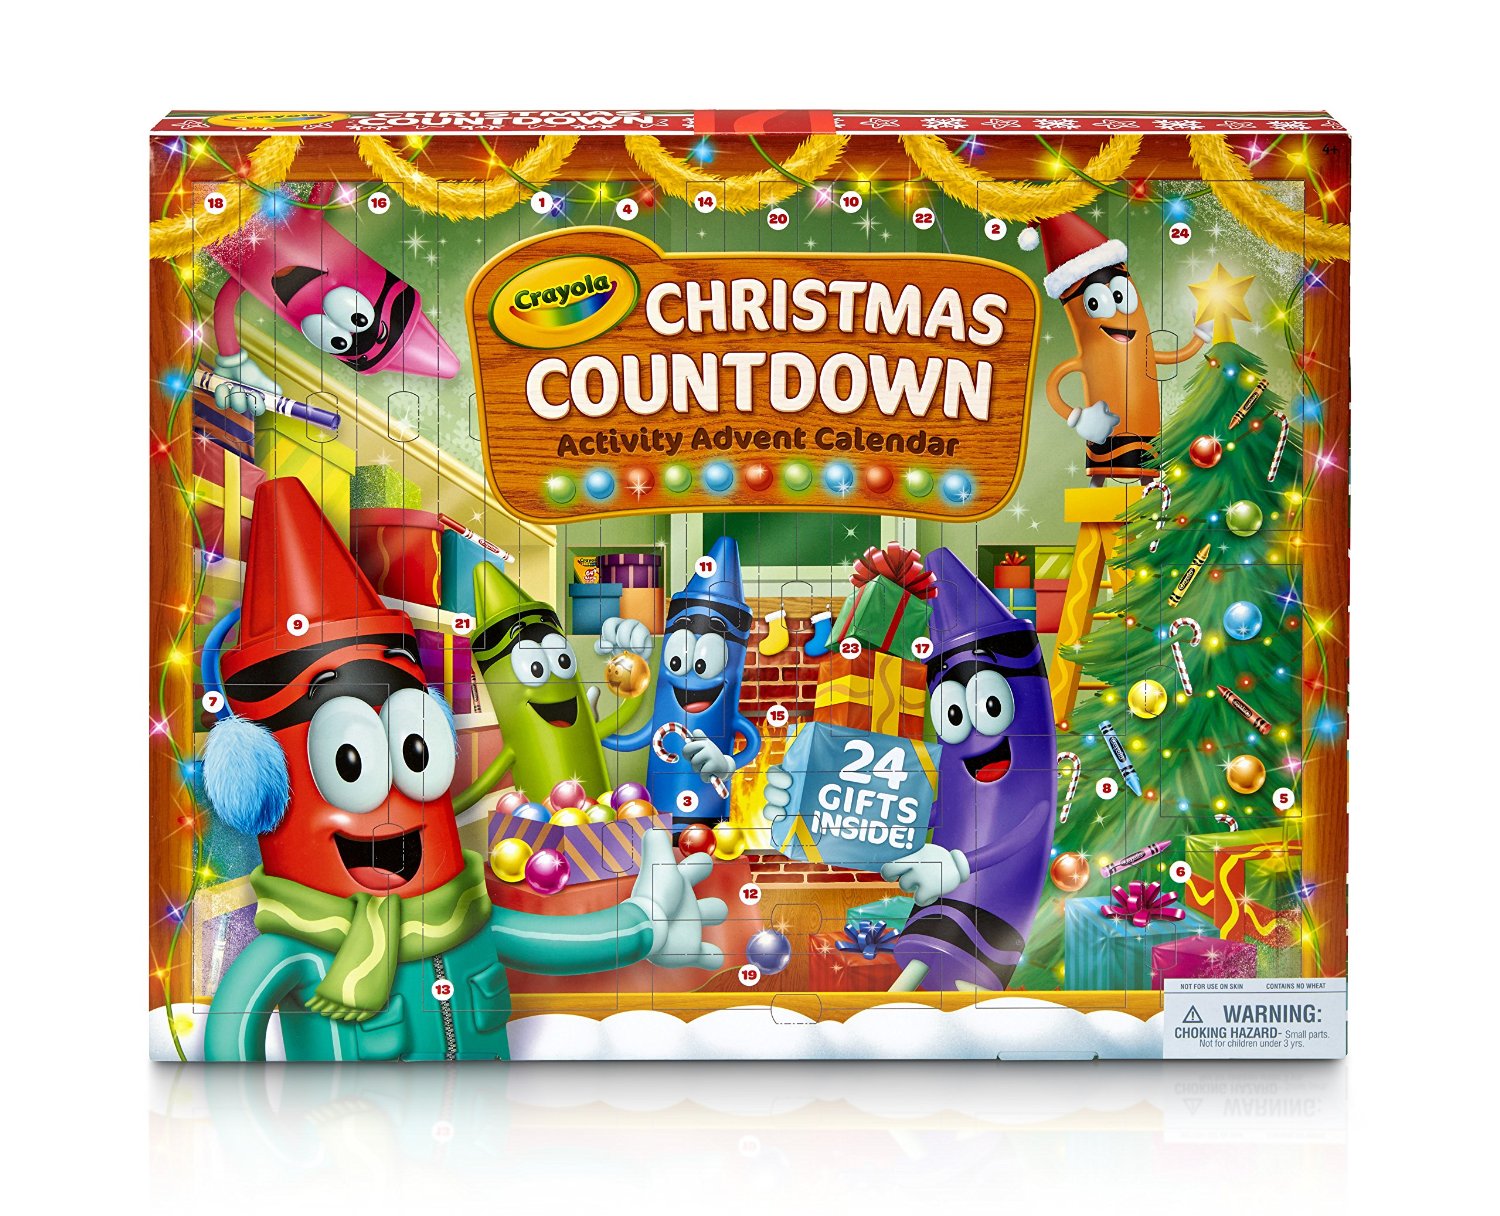 Crayola Christmas Countdown Activity Advent Calendar – Just $15.98!